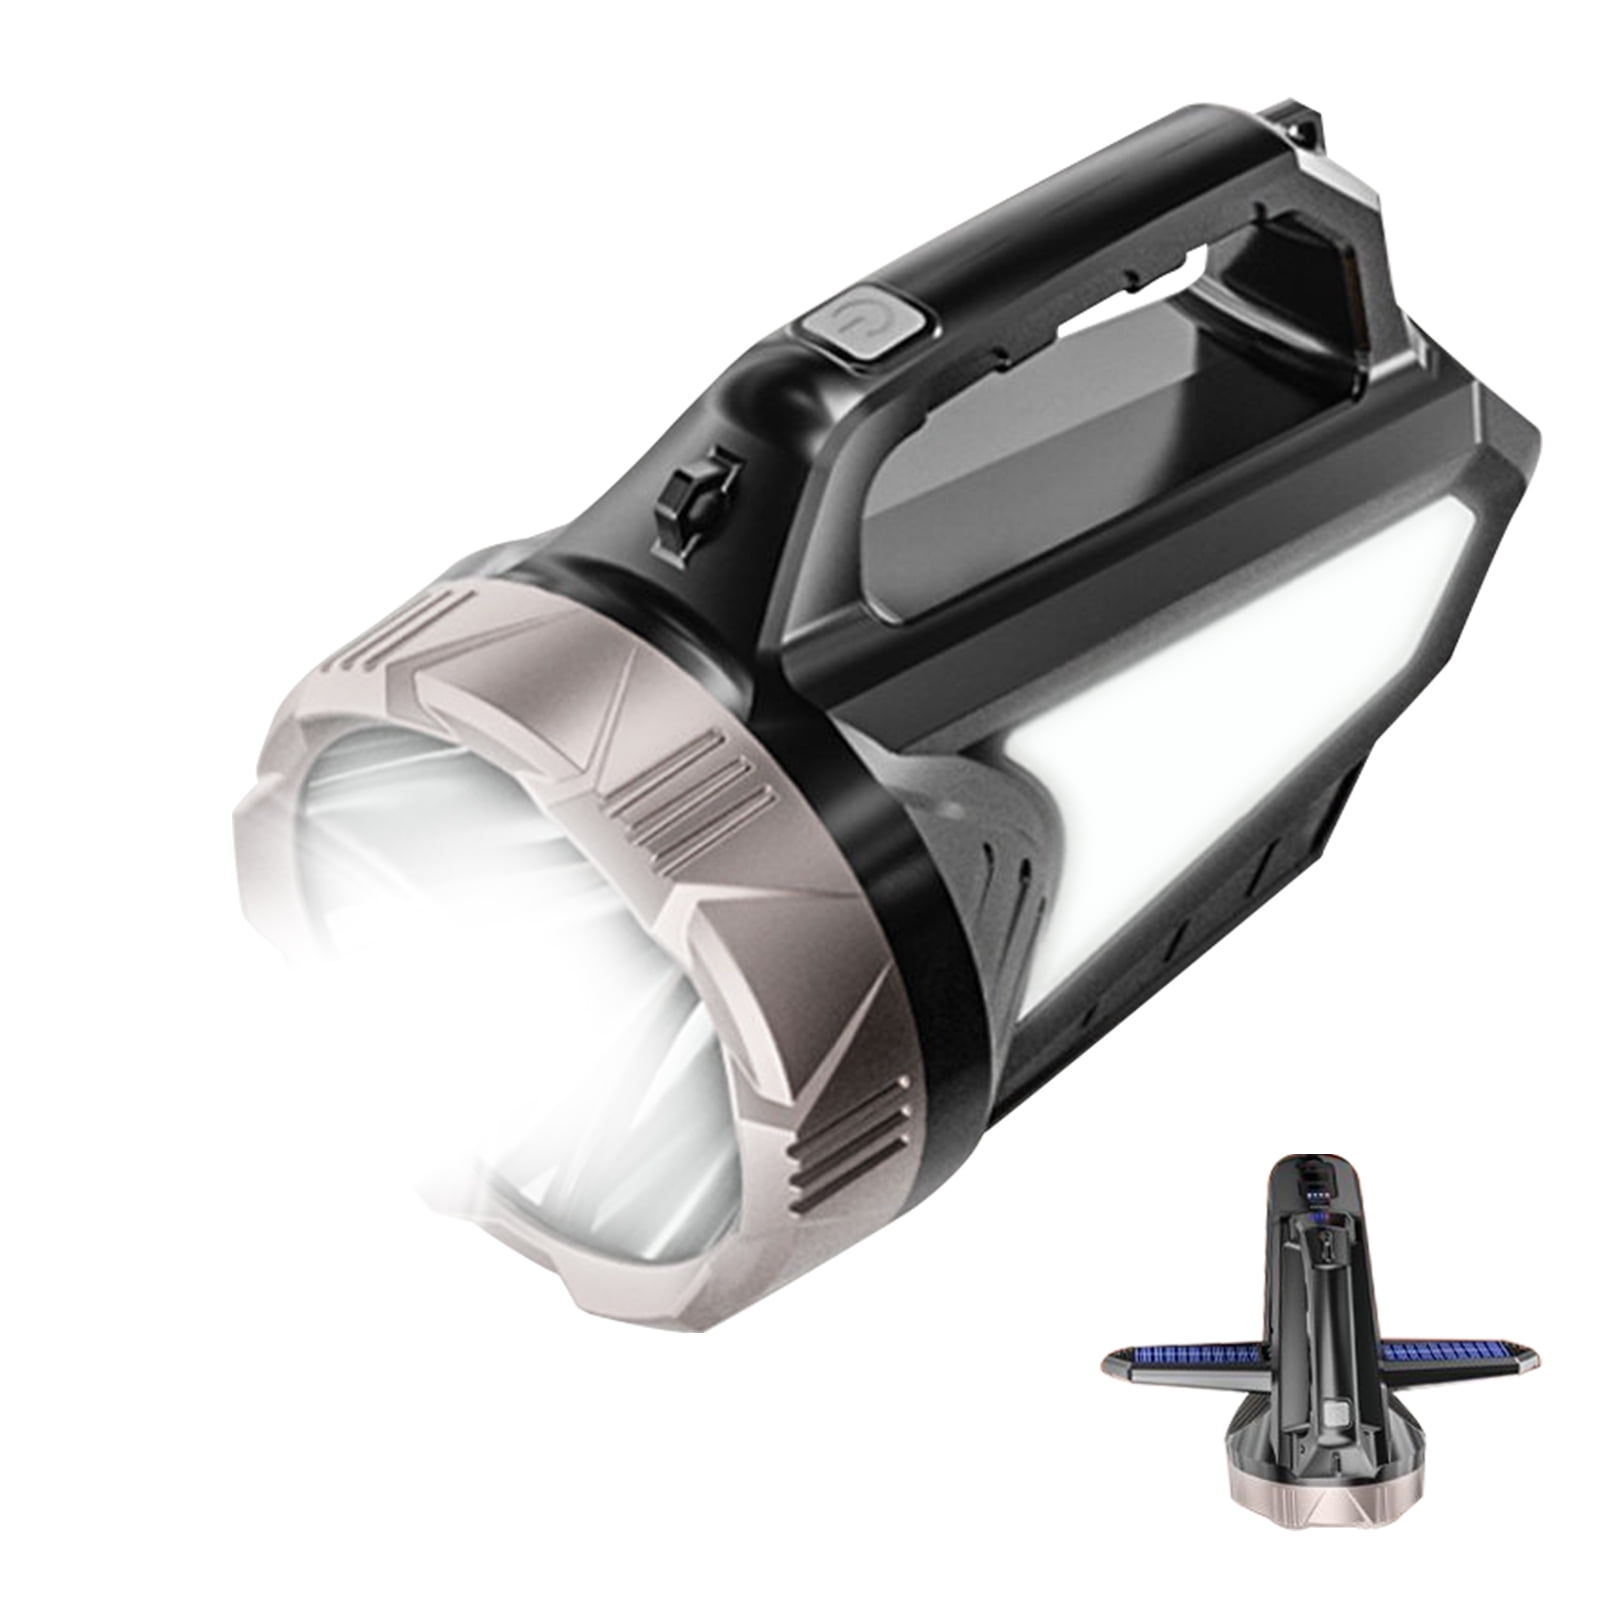 Lampe torche LED rechargeable Lux Premium Selector